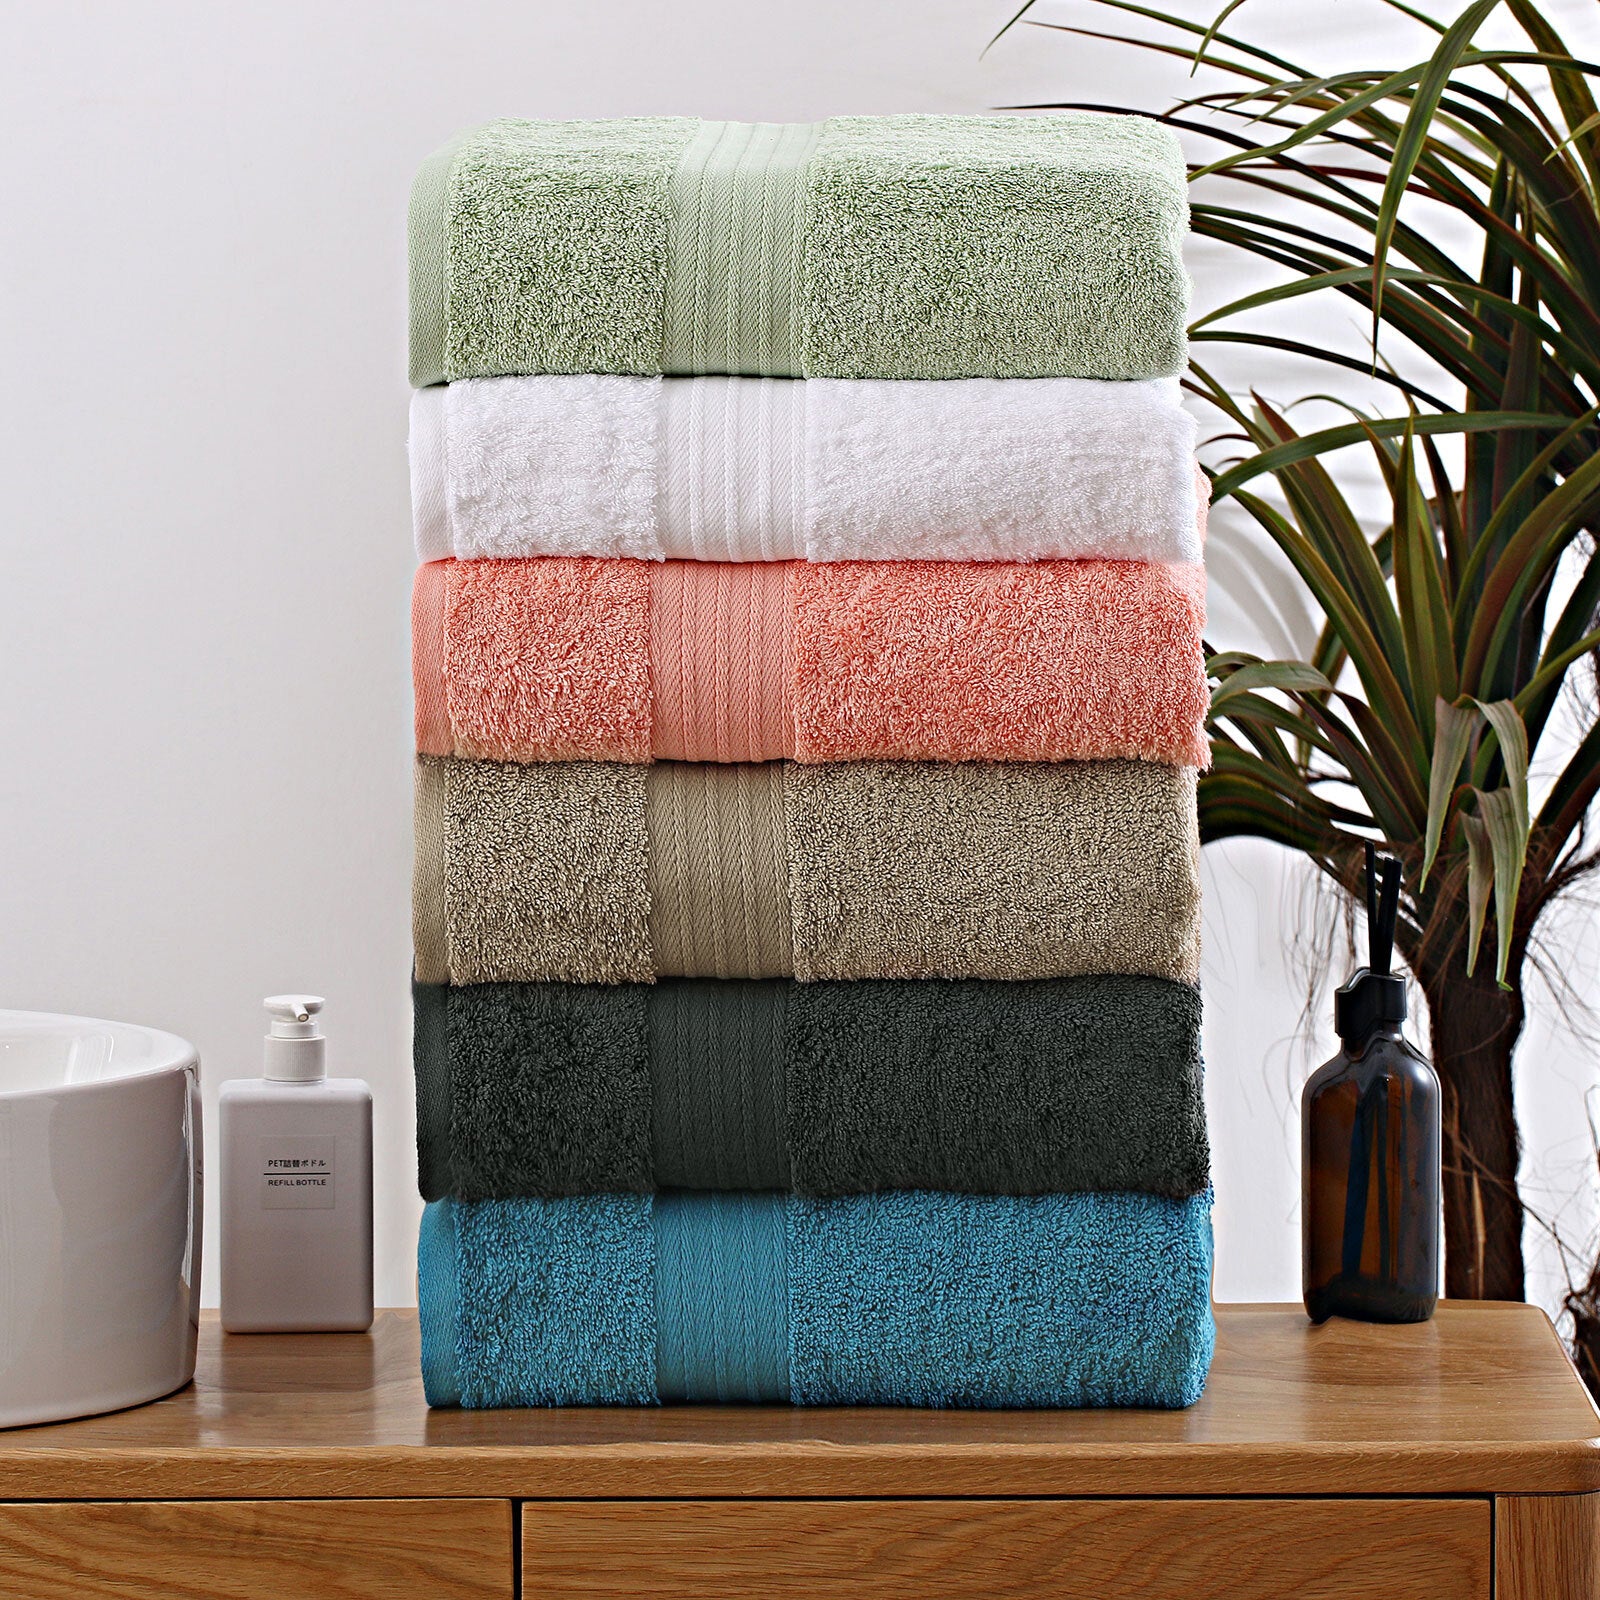 Linenland Extra Large Bath Sheet Towel 89 x 178cm - Sage Green - BM House & Garden